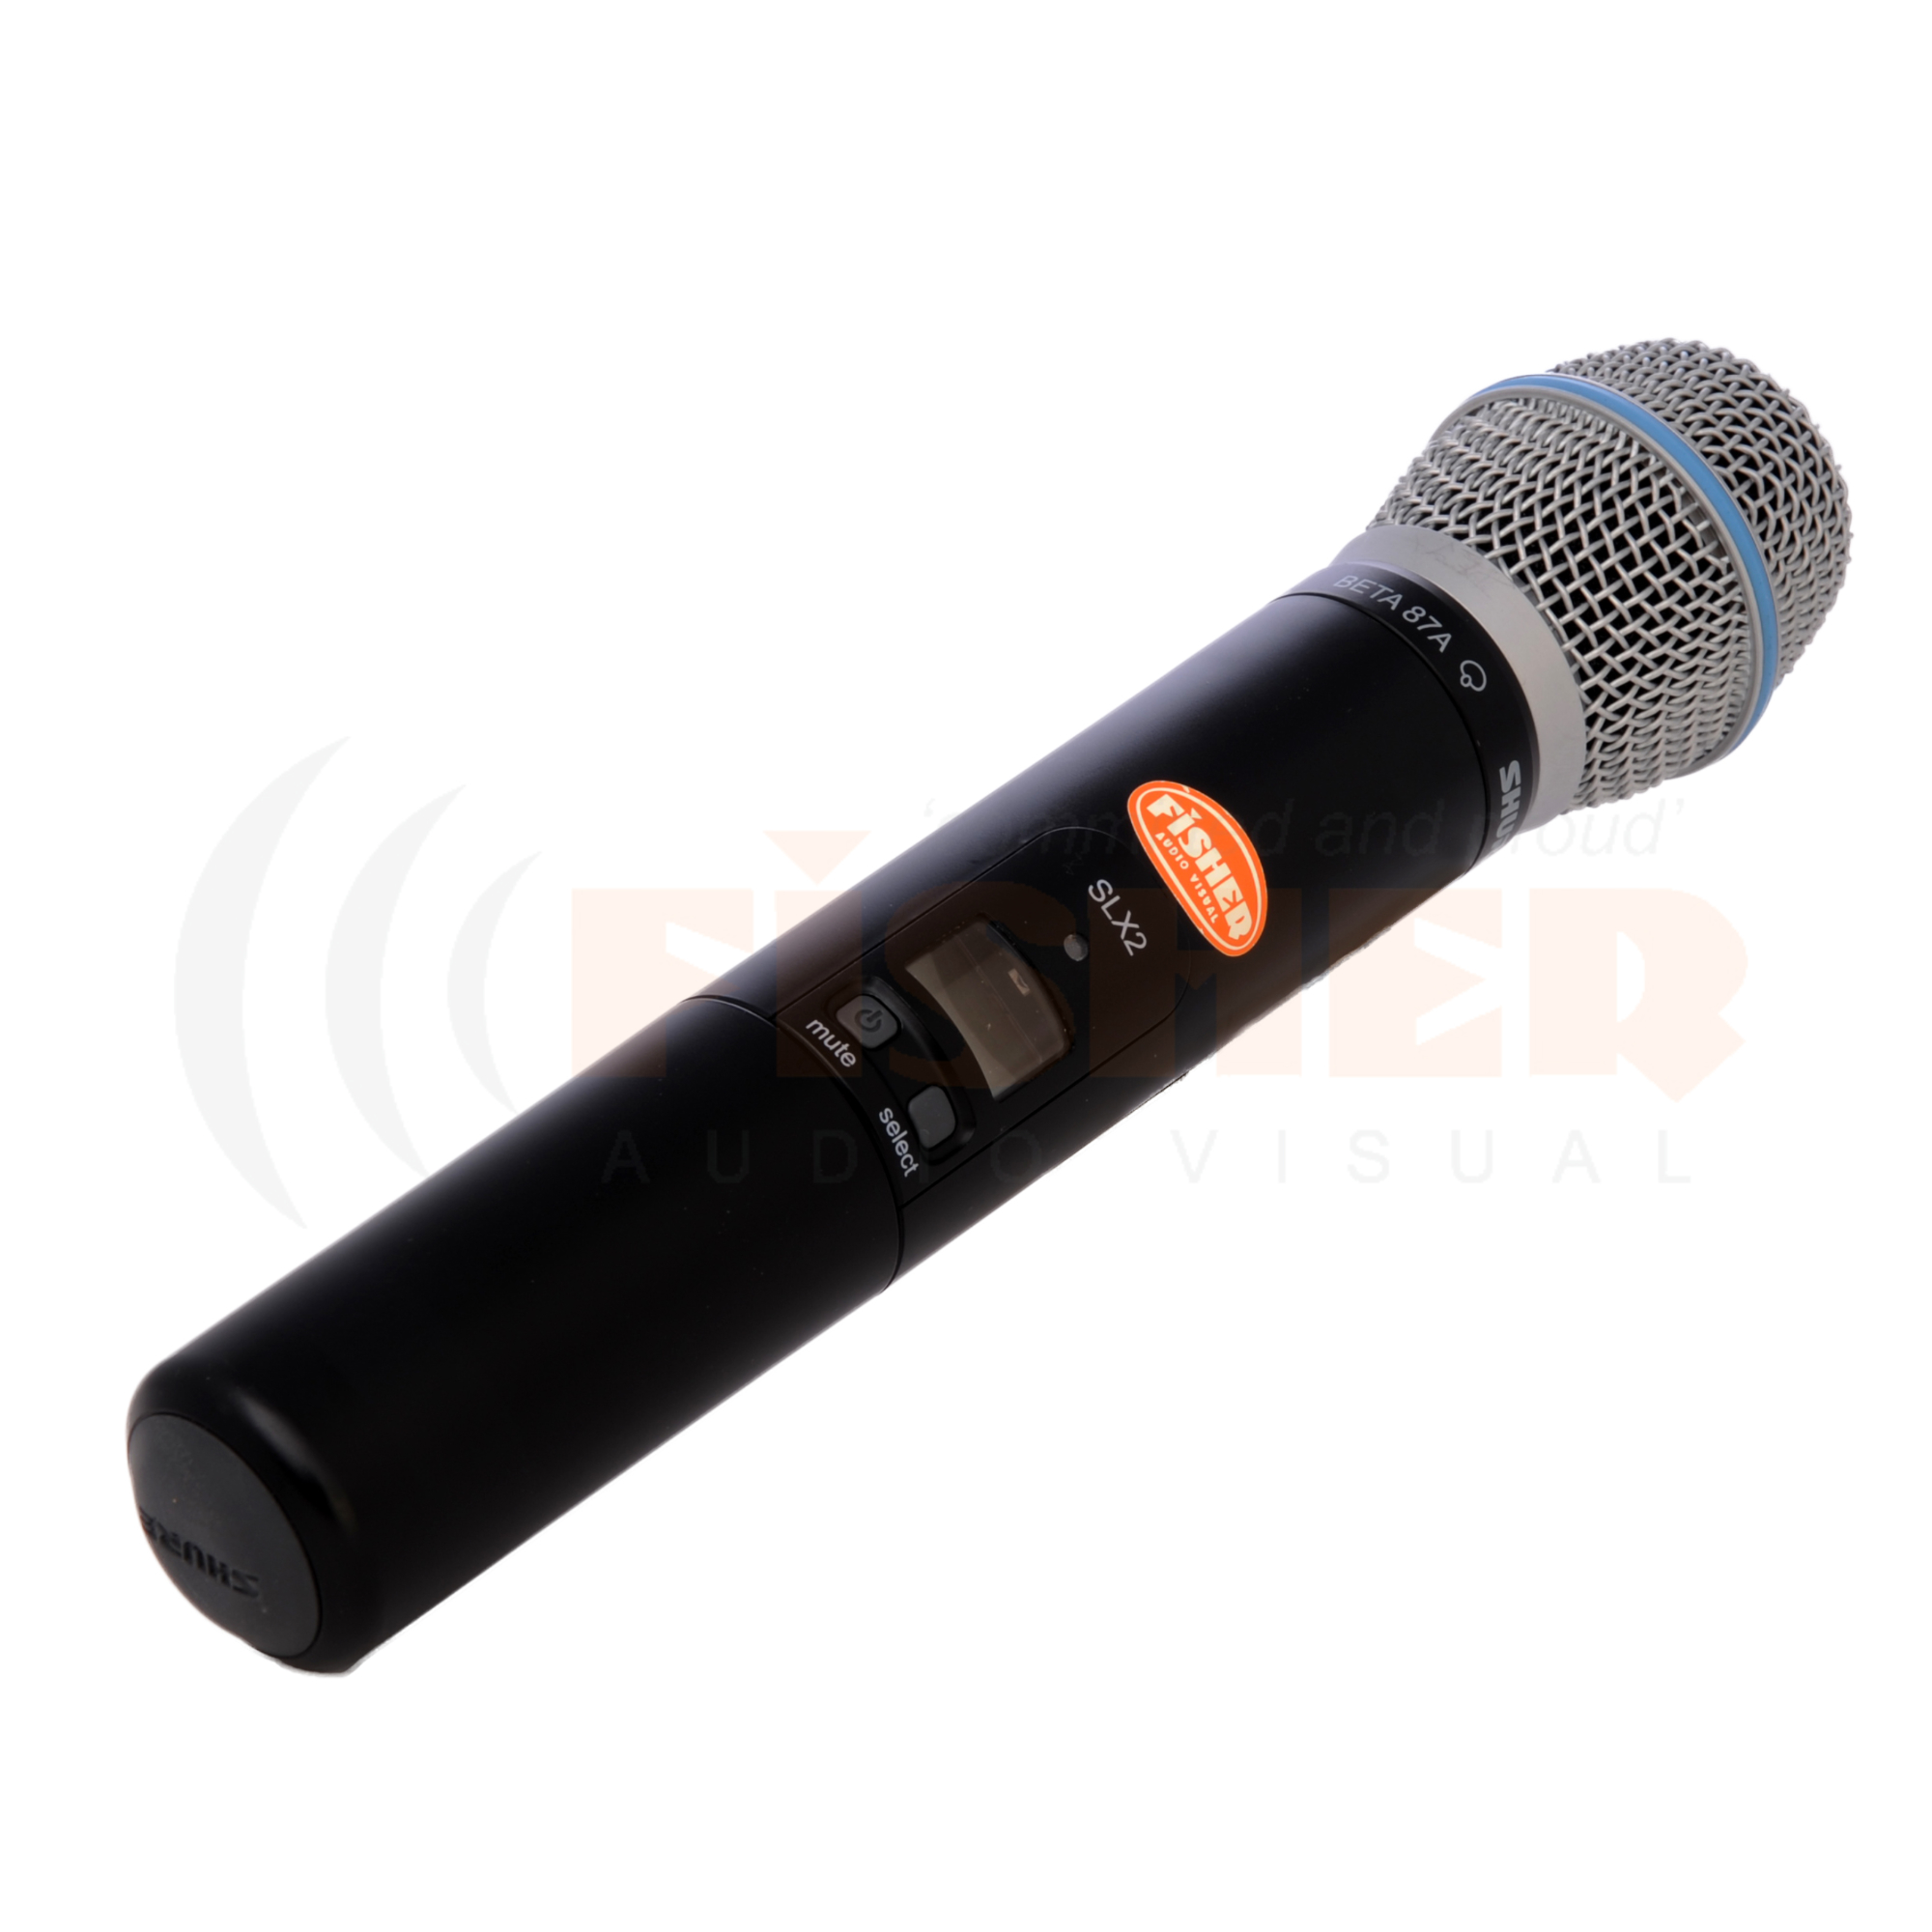 Shure SLX Wireless Microphone Kit - Fisher Audio Visual